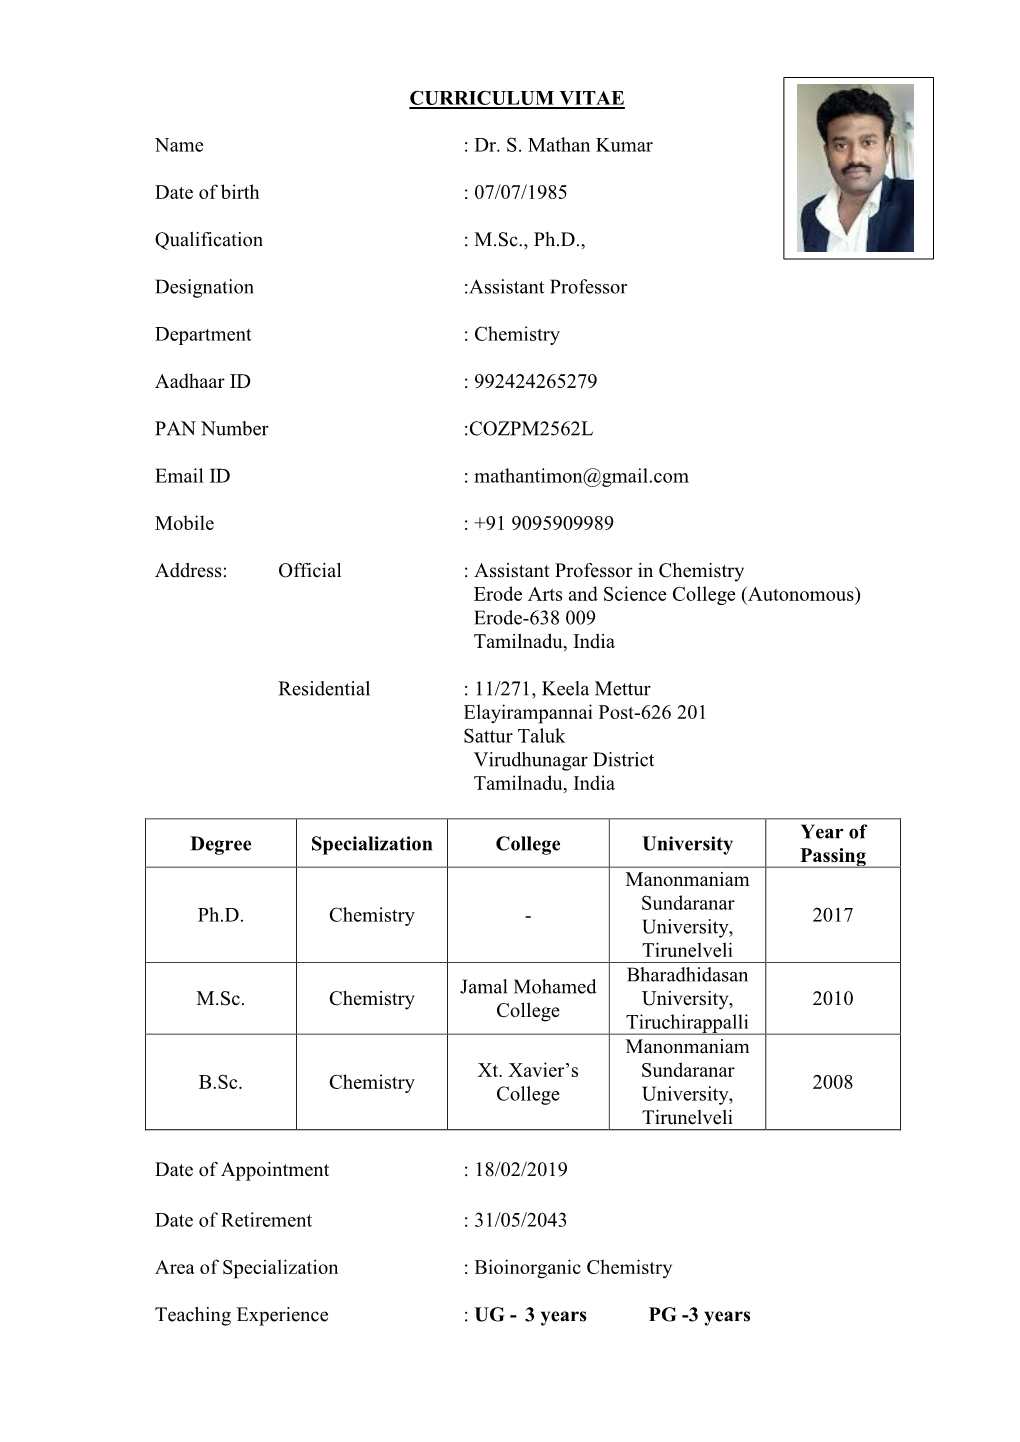 CURRICULUM VITAE Name : Dr. S. Mathan Kumar Date of Birth : 07/07/1985 Qualification : M.Sc., Ph.D., Designation :Assistant